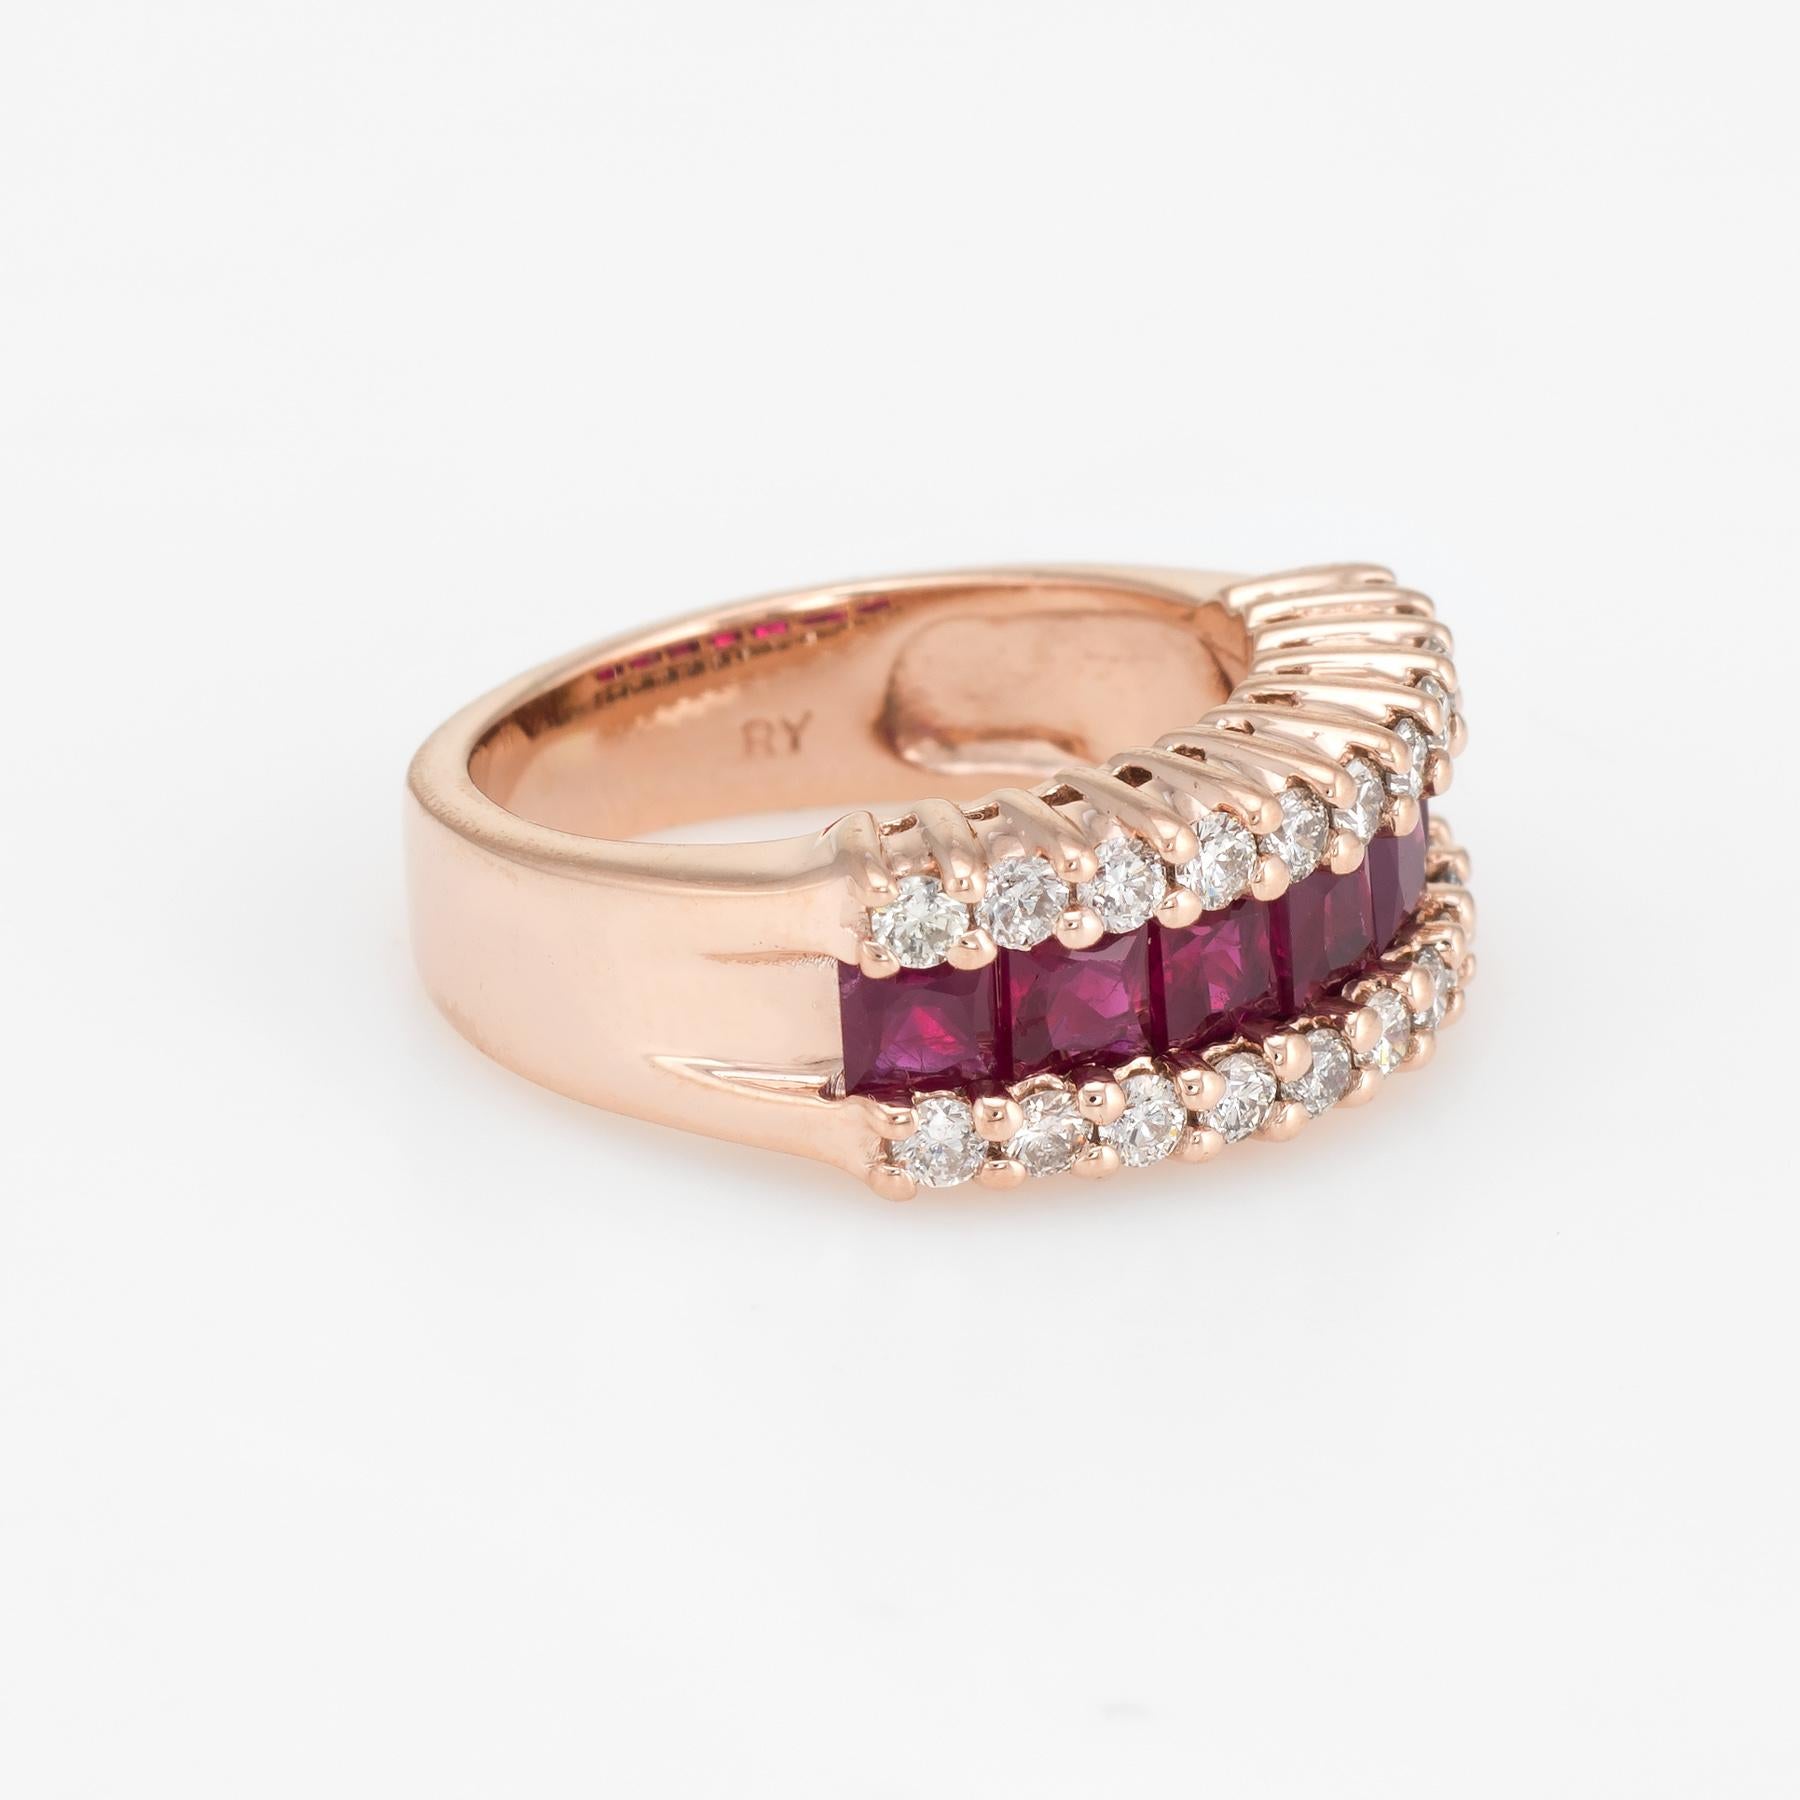 Modern Vintage Ruby Diamond Band 14 Karat Rose Gold Ring Alternative Wedding Jewelry